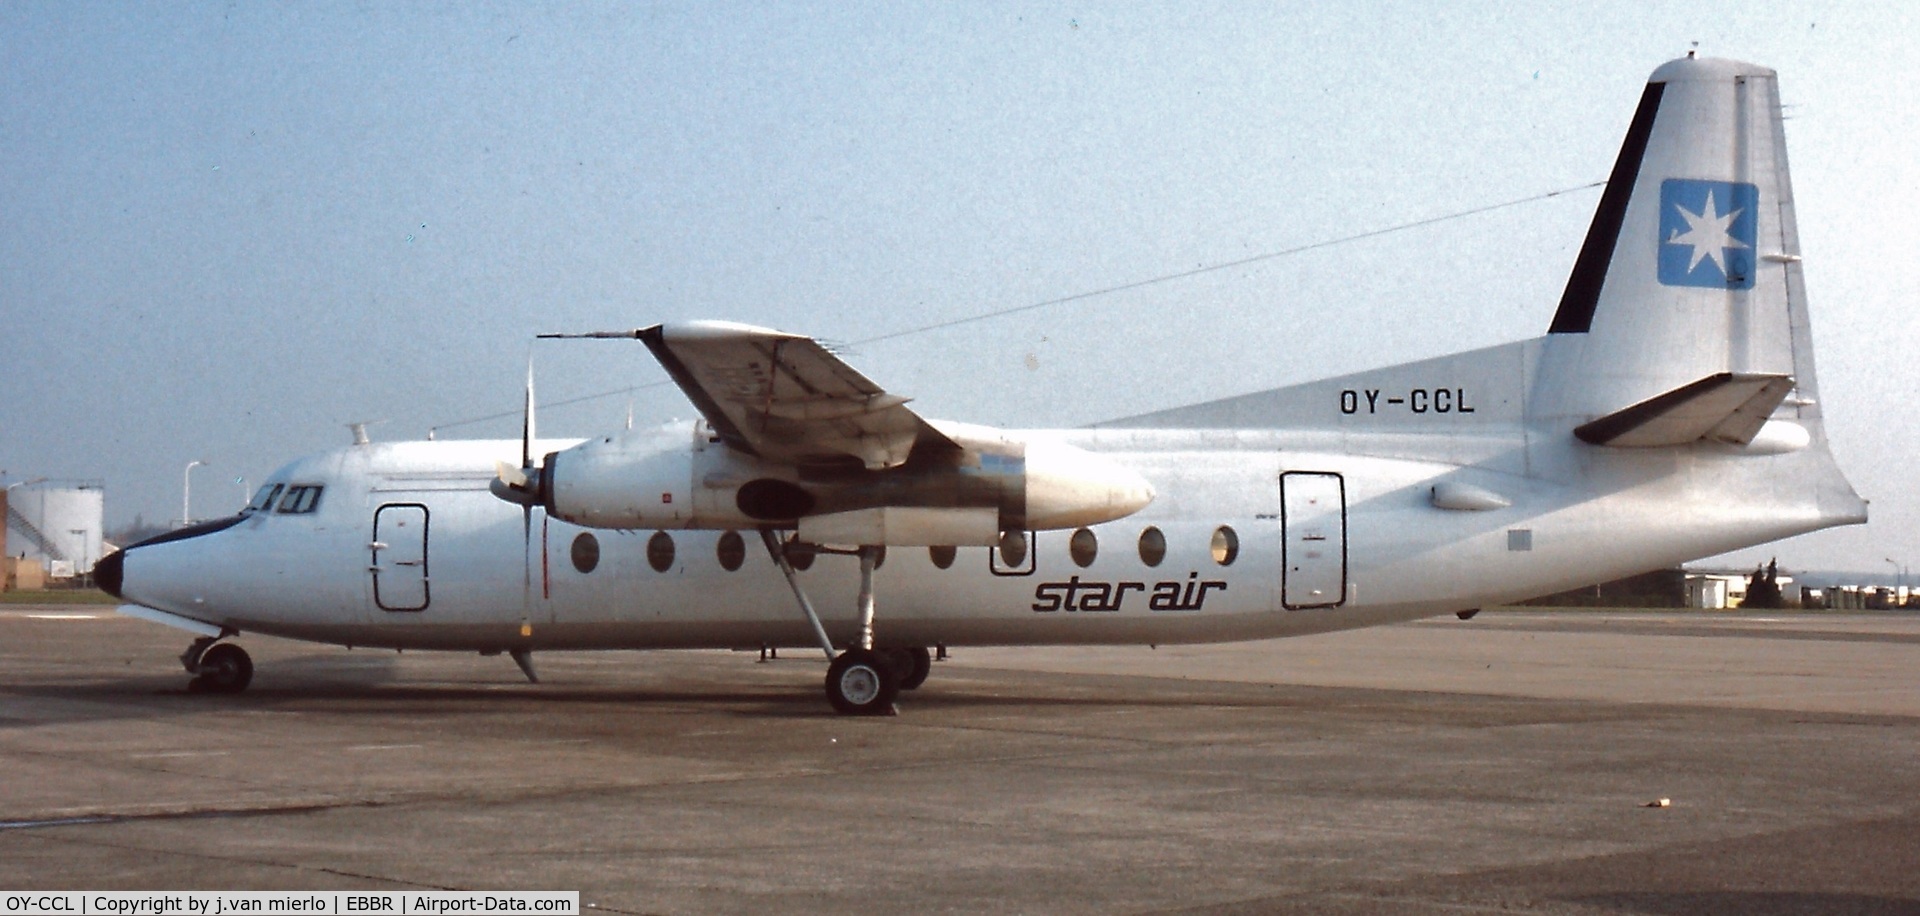 OY-CCL, 1970 Fokker F.27-600 Friendship C/N 10450, Flying parcels out of Brussels hub '80s